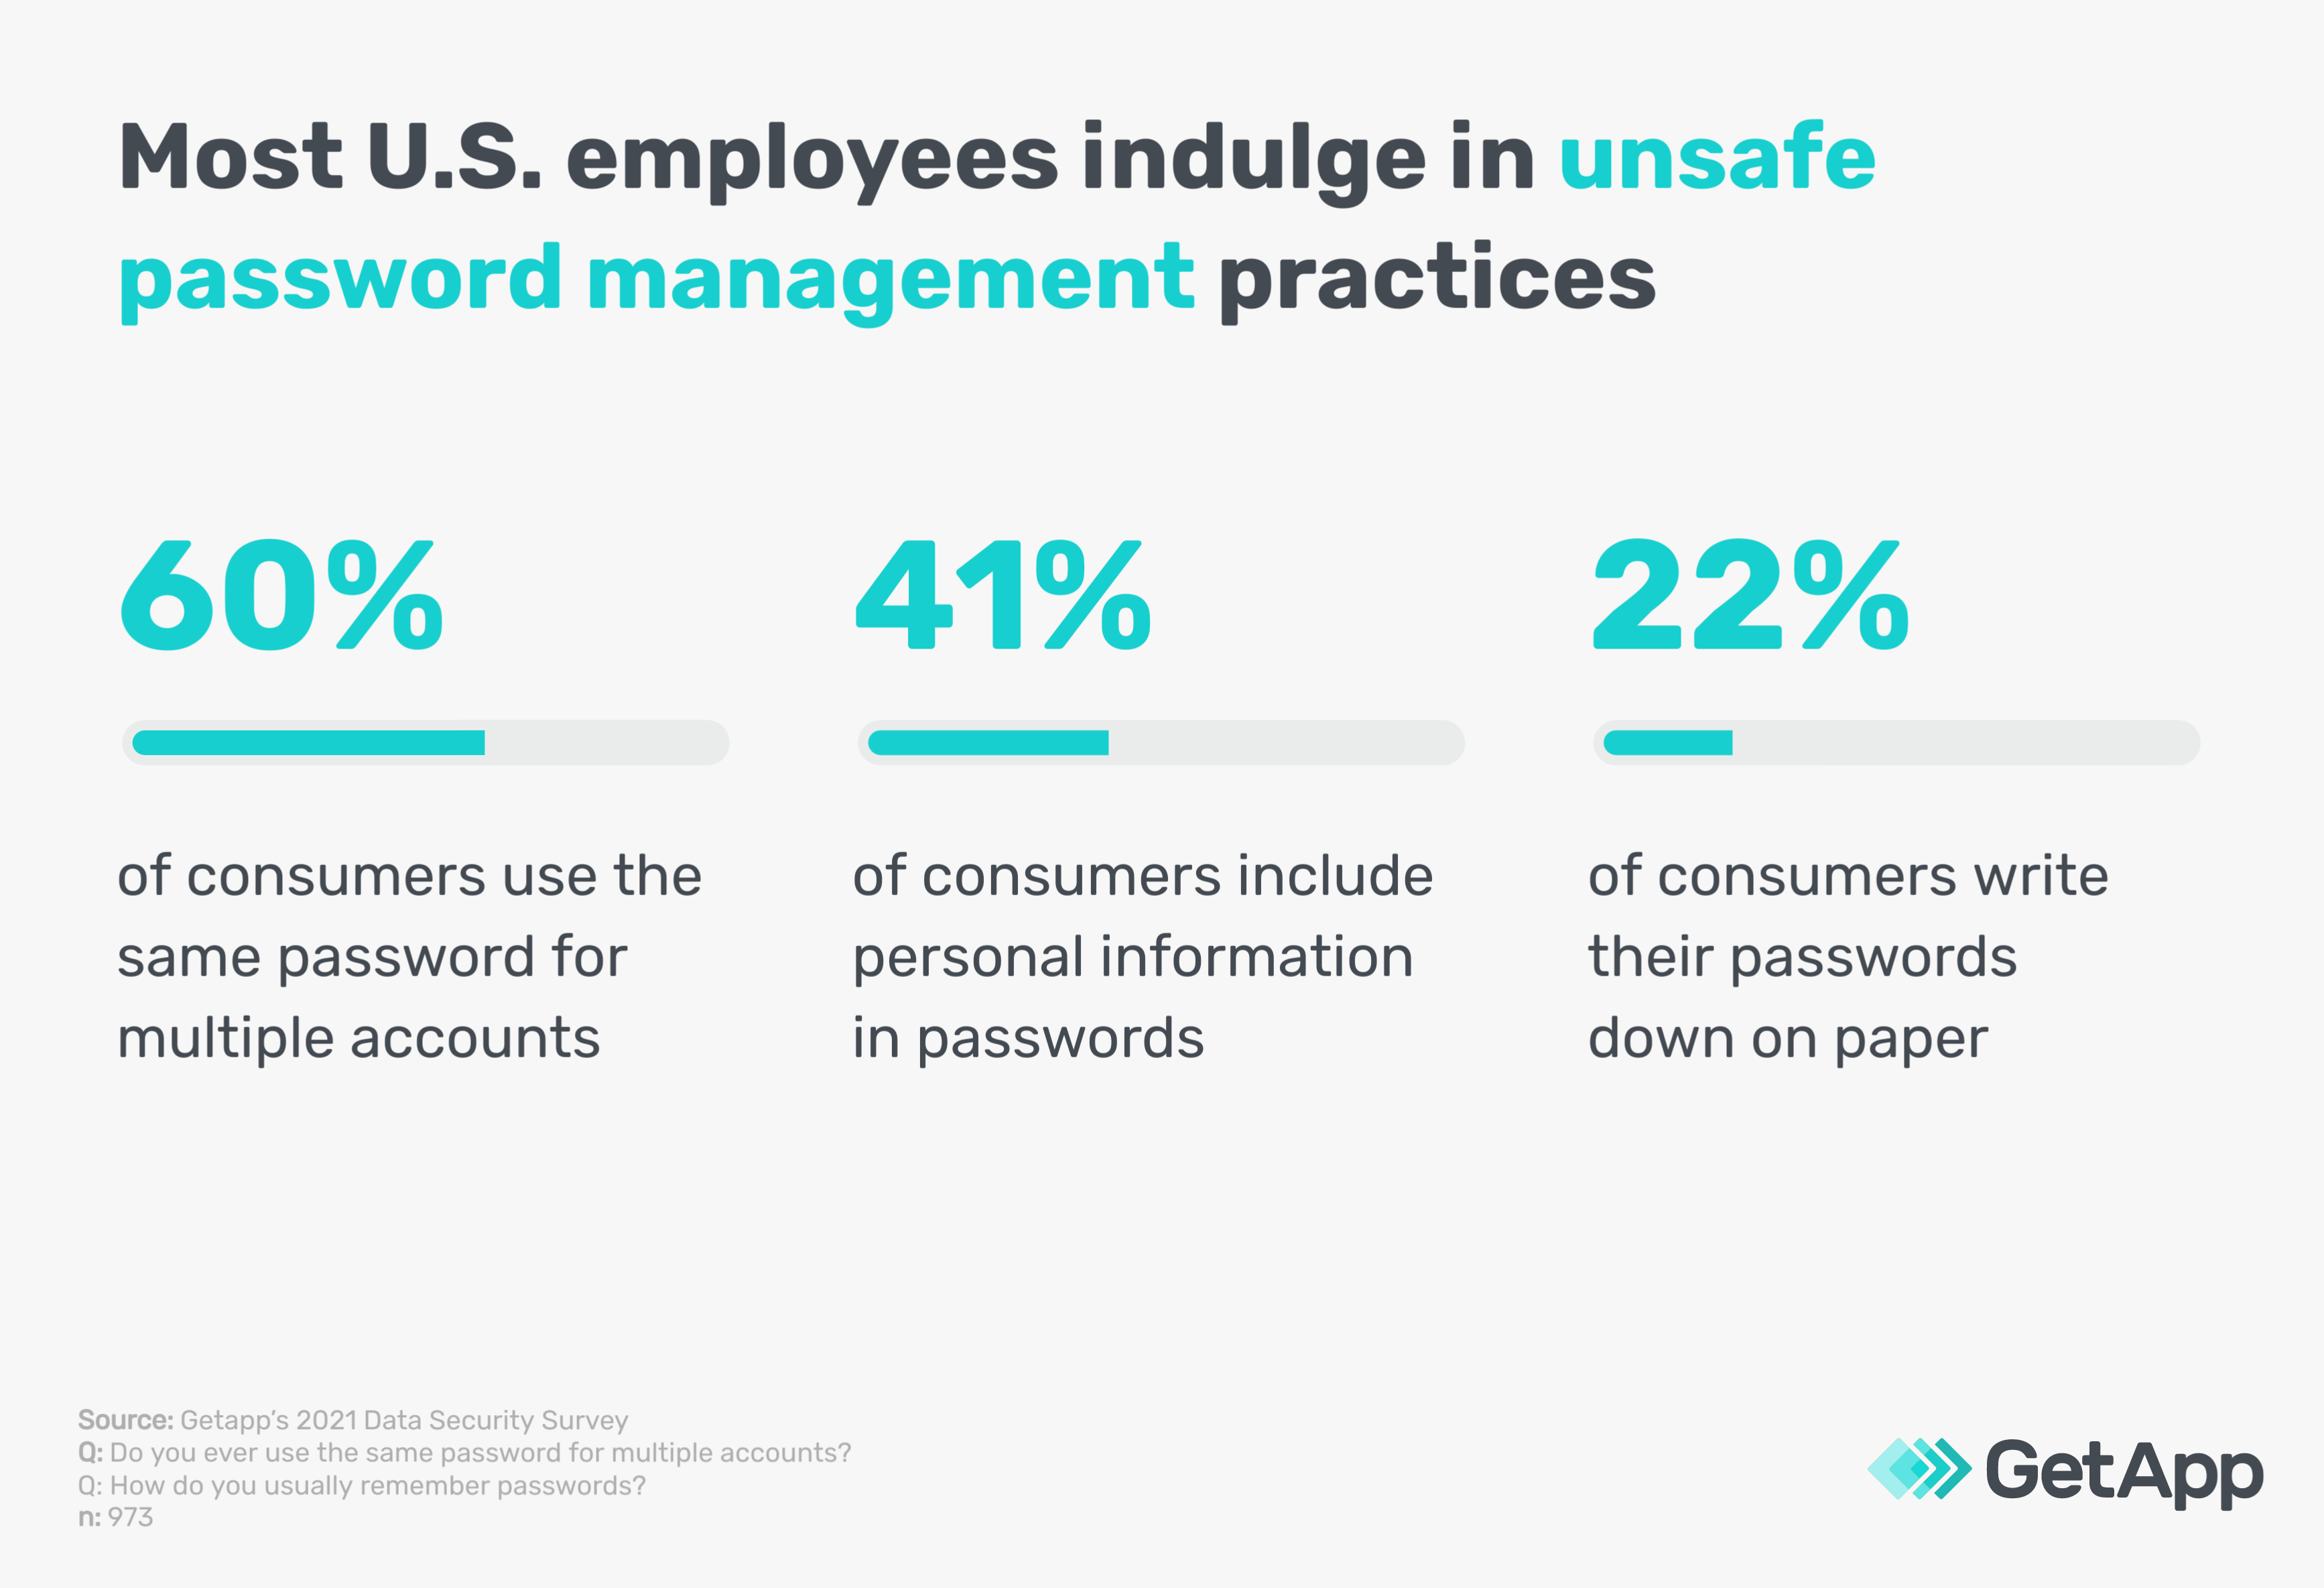 Password Management practices